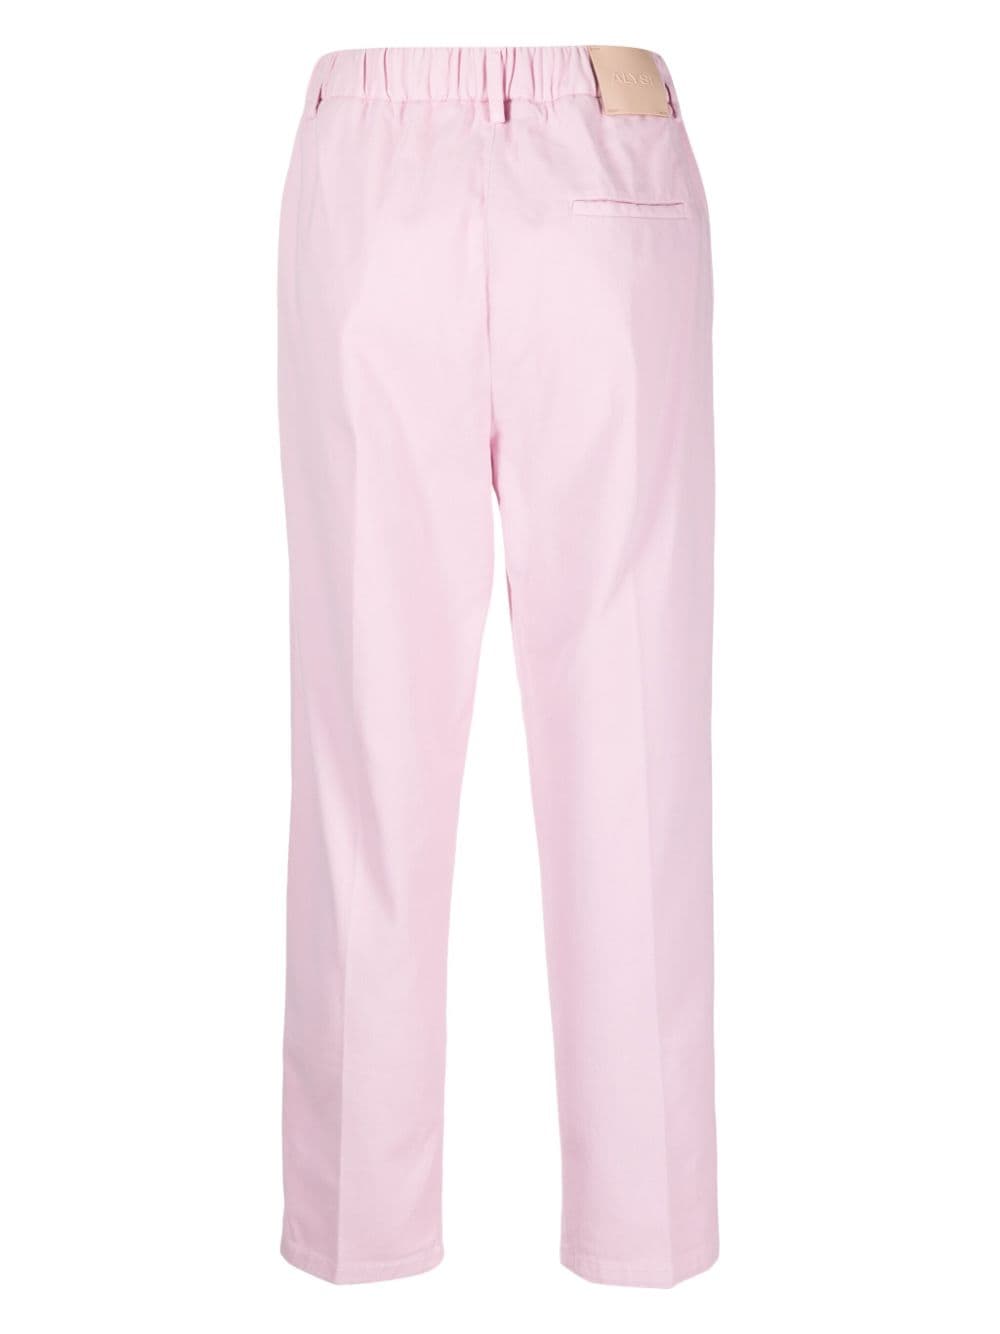 Pantalone rosa chiaro donna